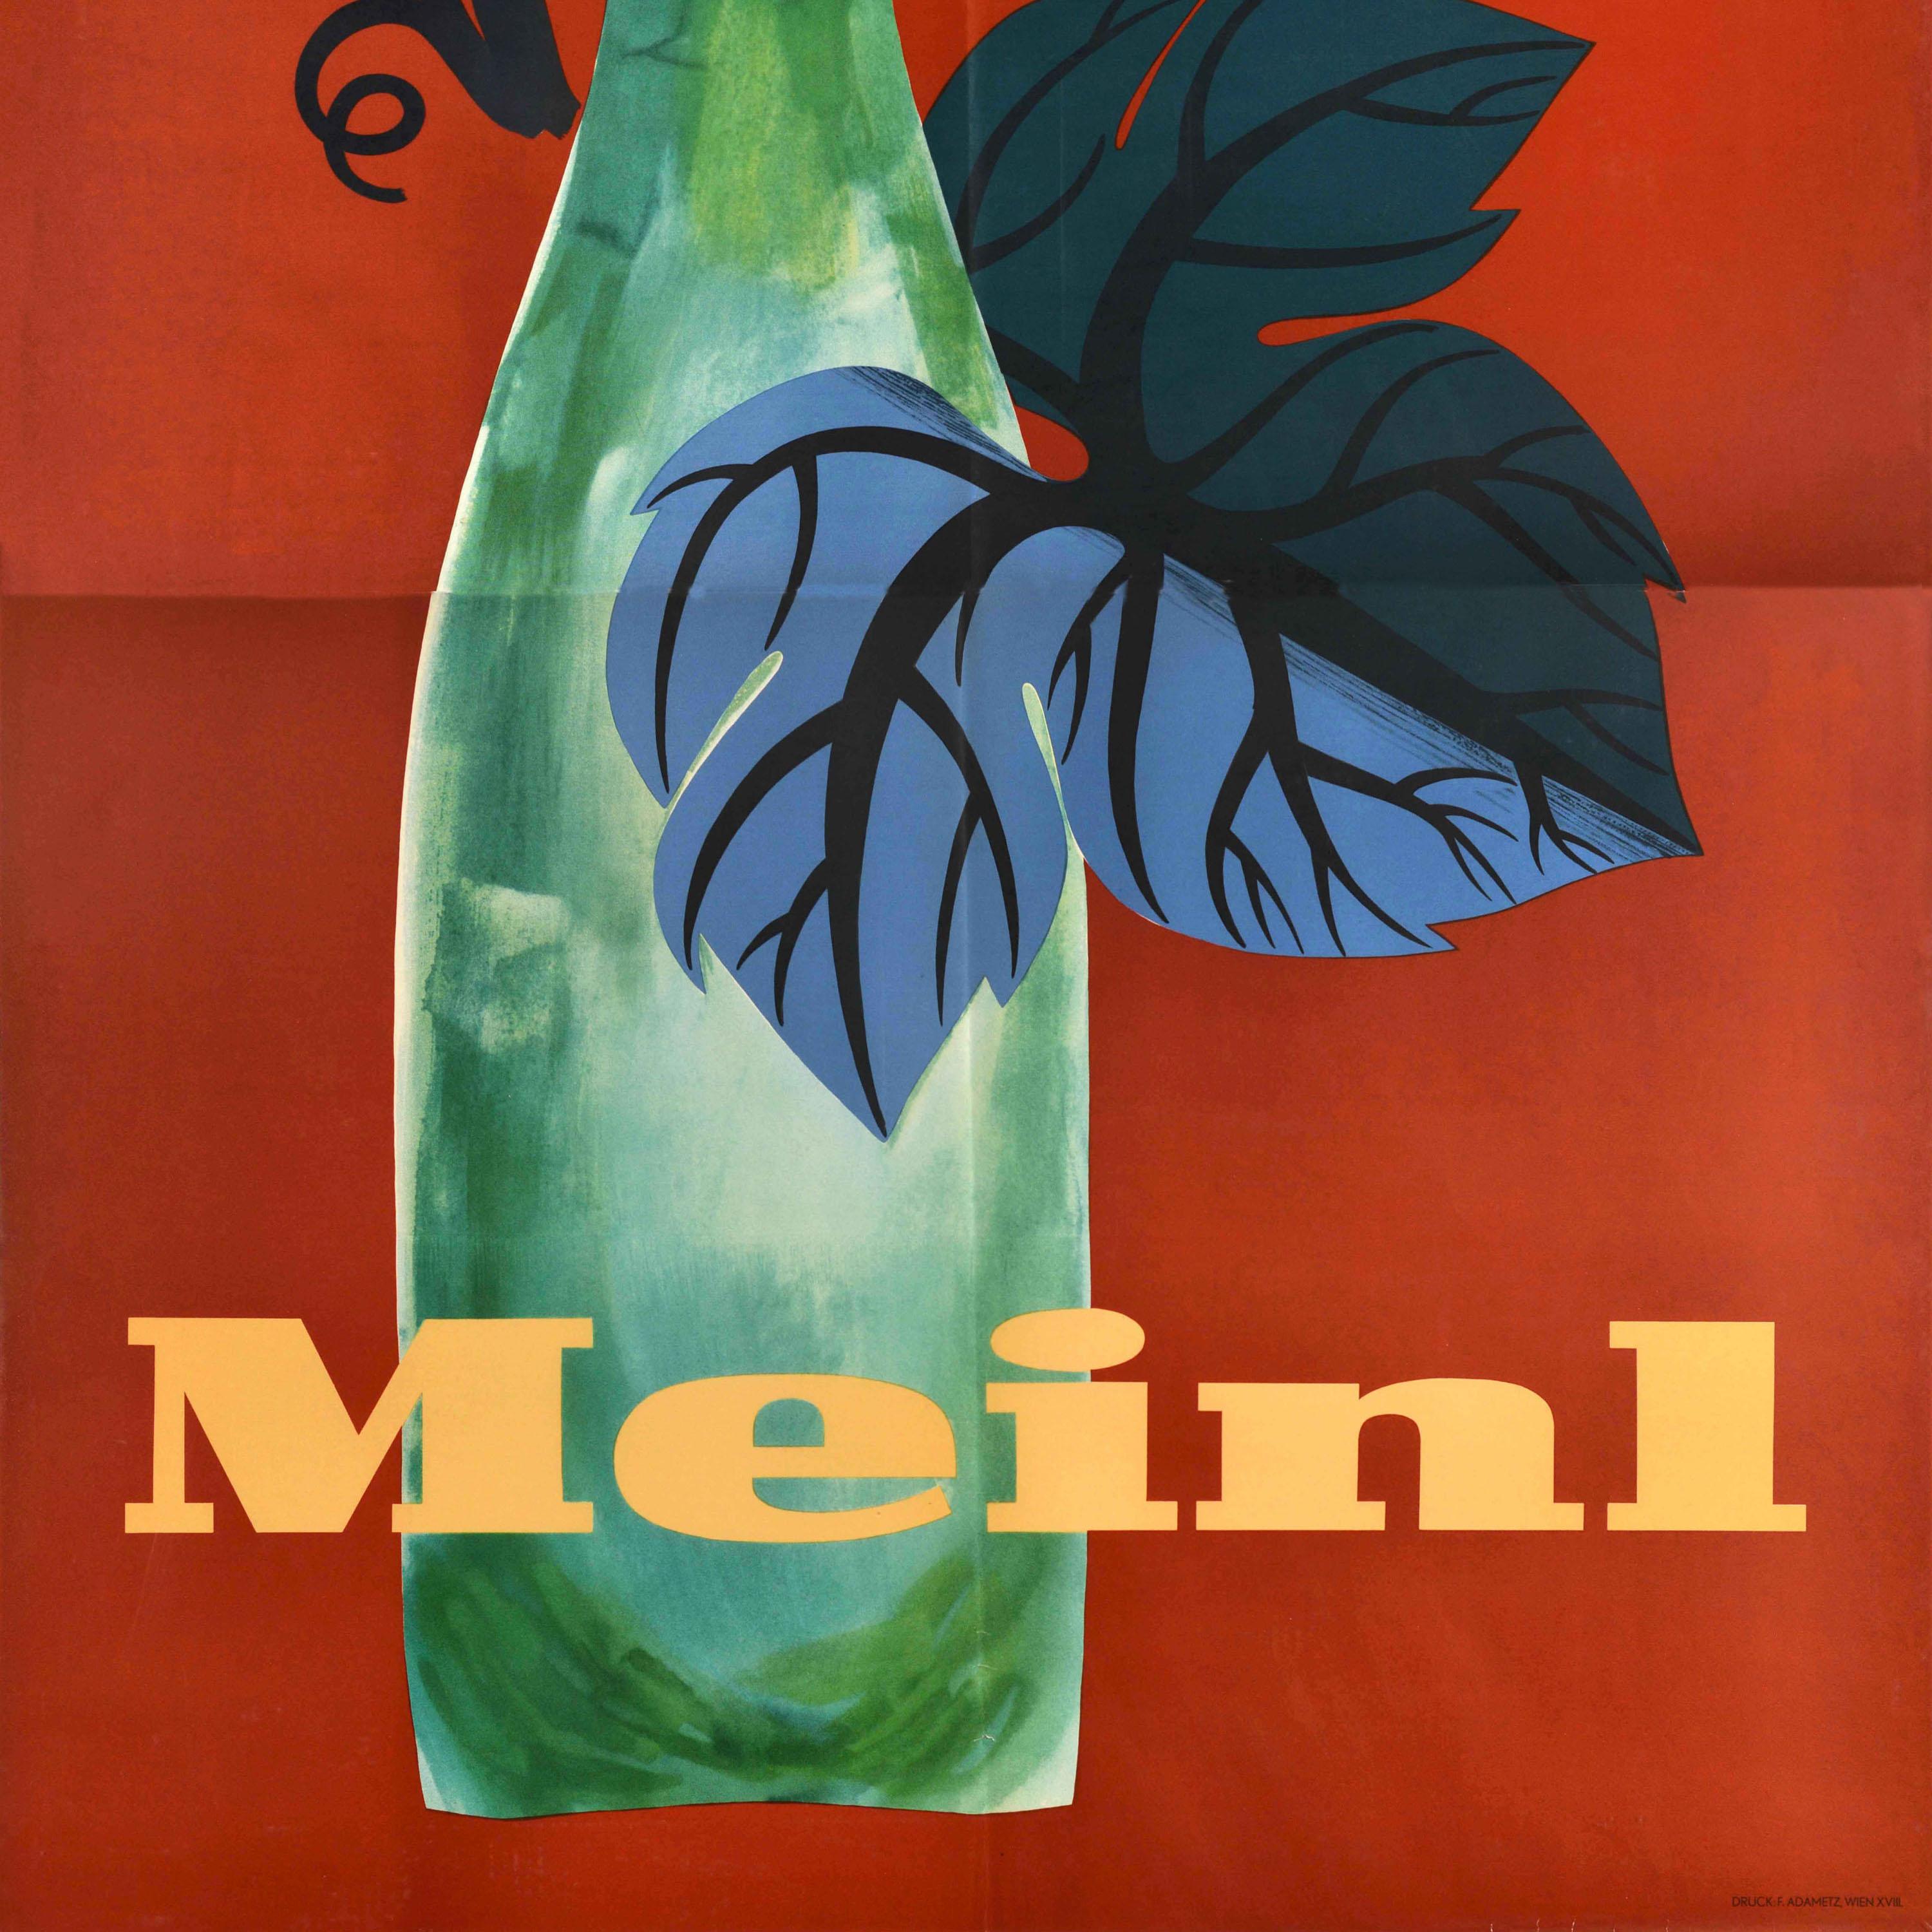 Original Vintage Drink Advertising Poster Meinl Leaf Wine Bottle Grape Design In Good Condition For Sale In London, GB